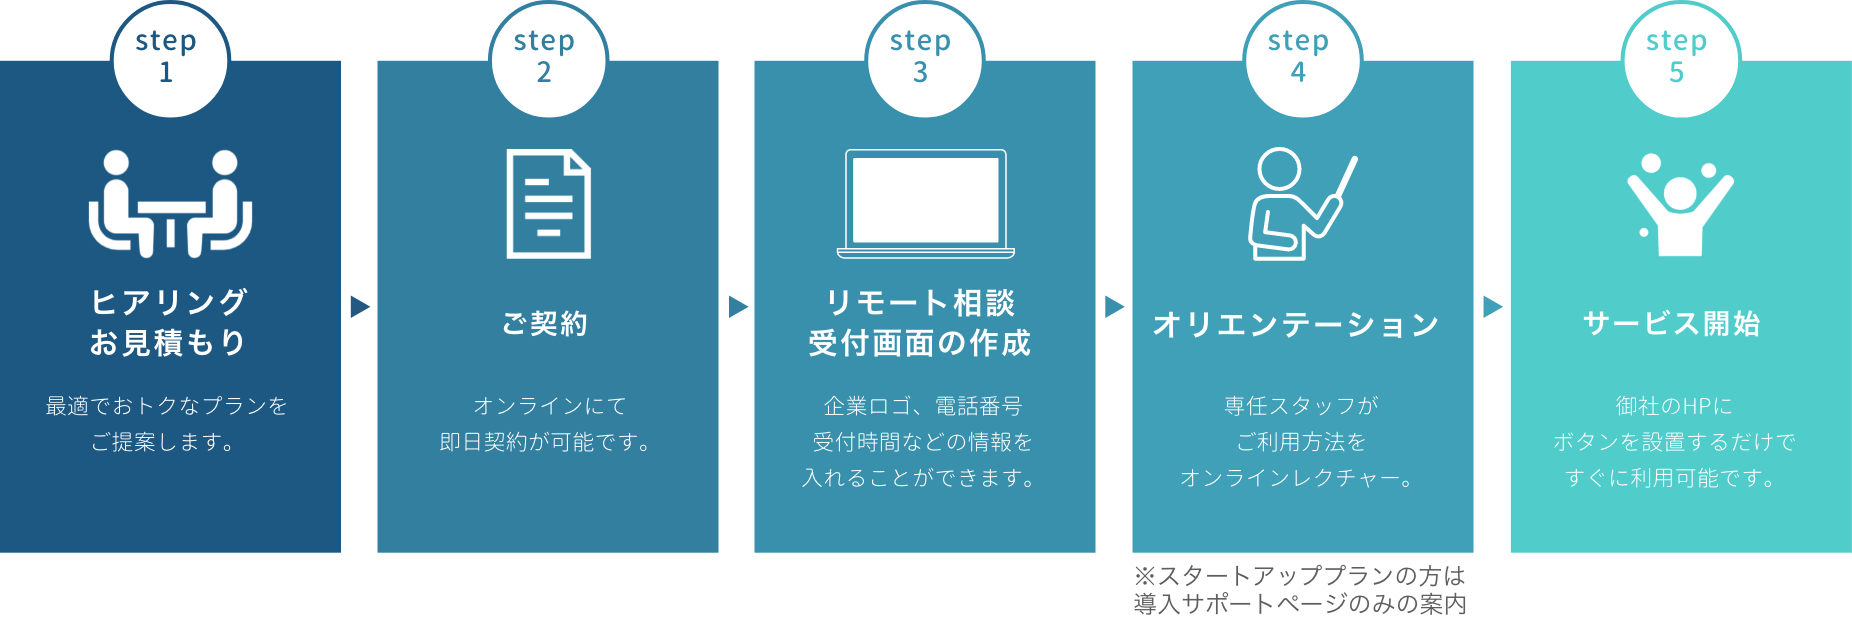 step1~step5